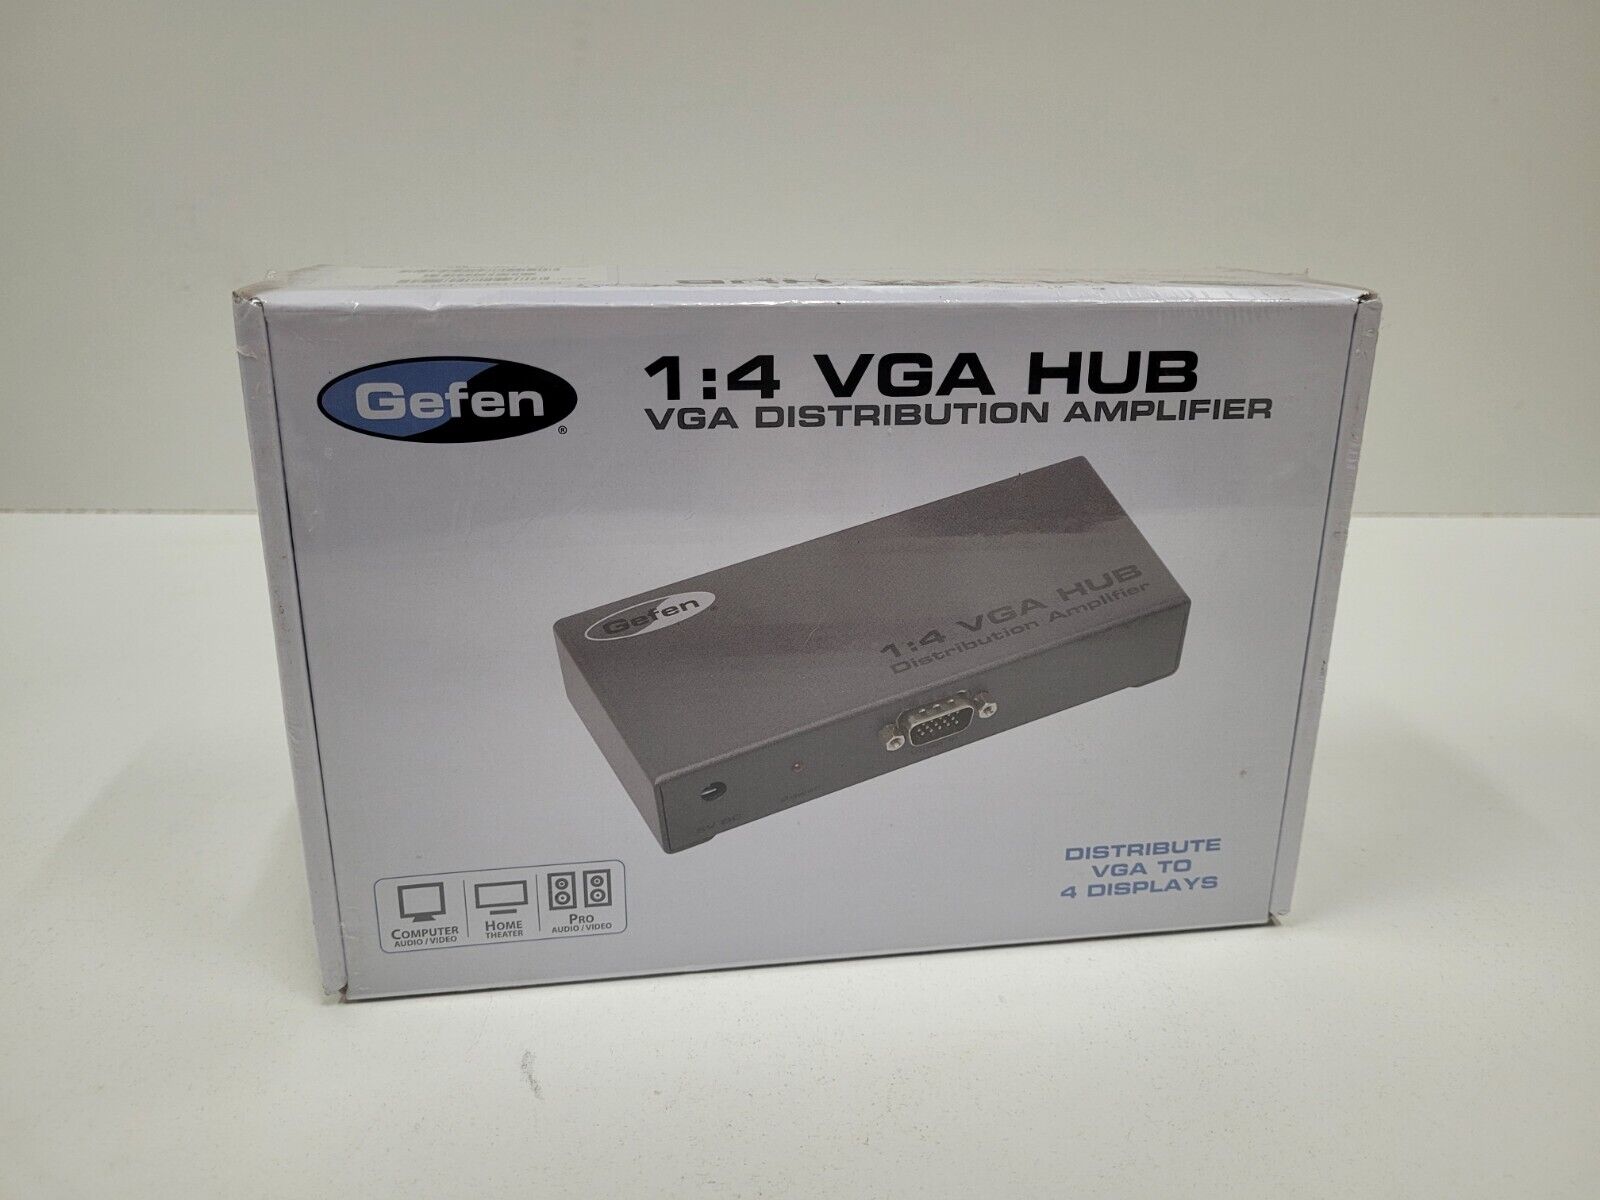 Gefen EXT-VGA-145-CO 1:4 VGA Hub Kit, VGA Distribution Amplifier NEW Sealed